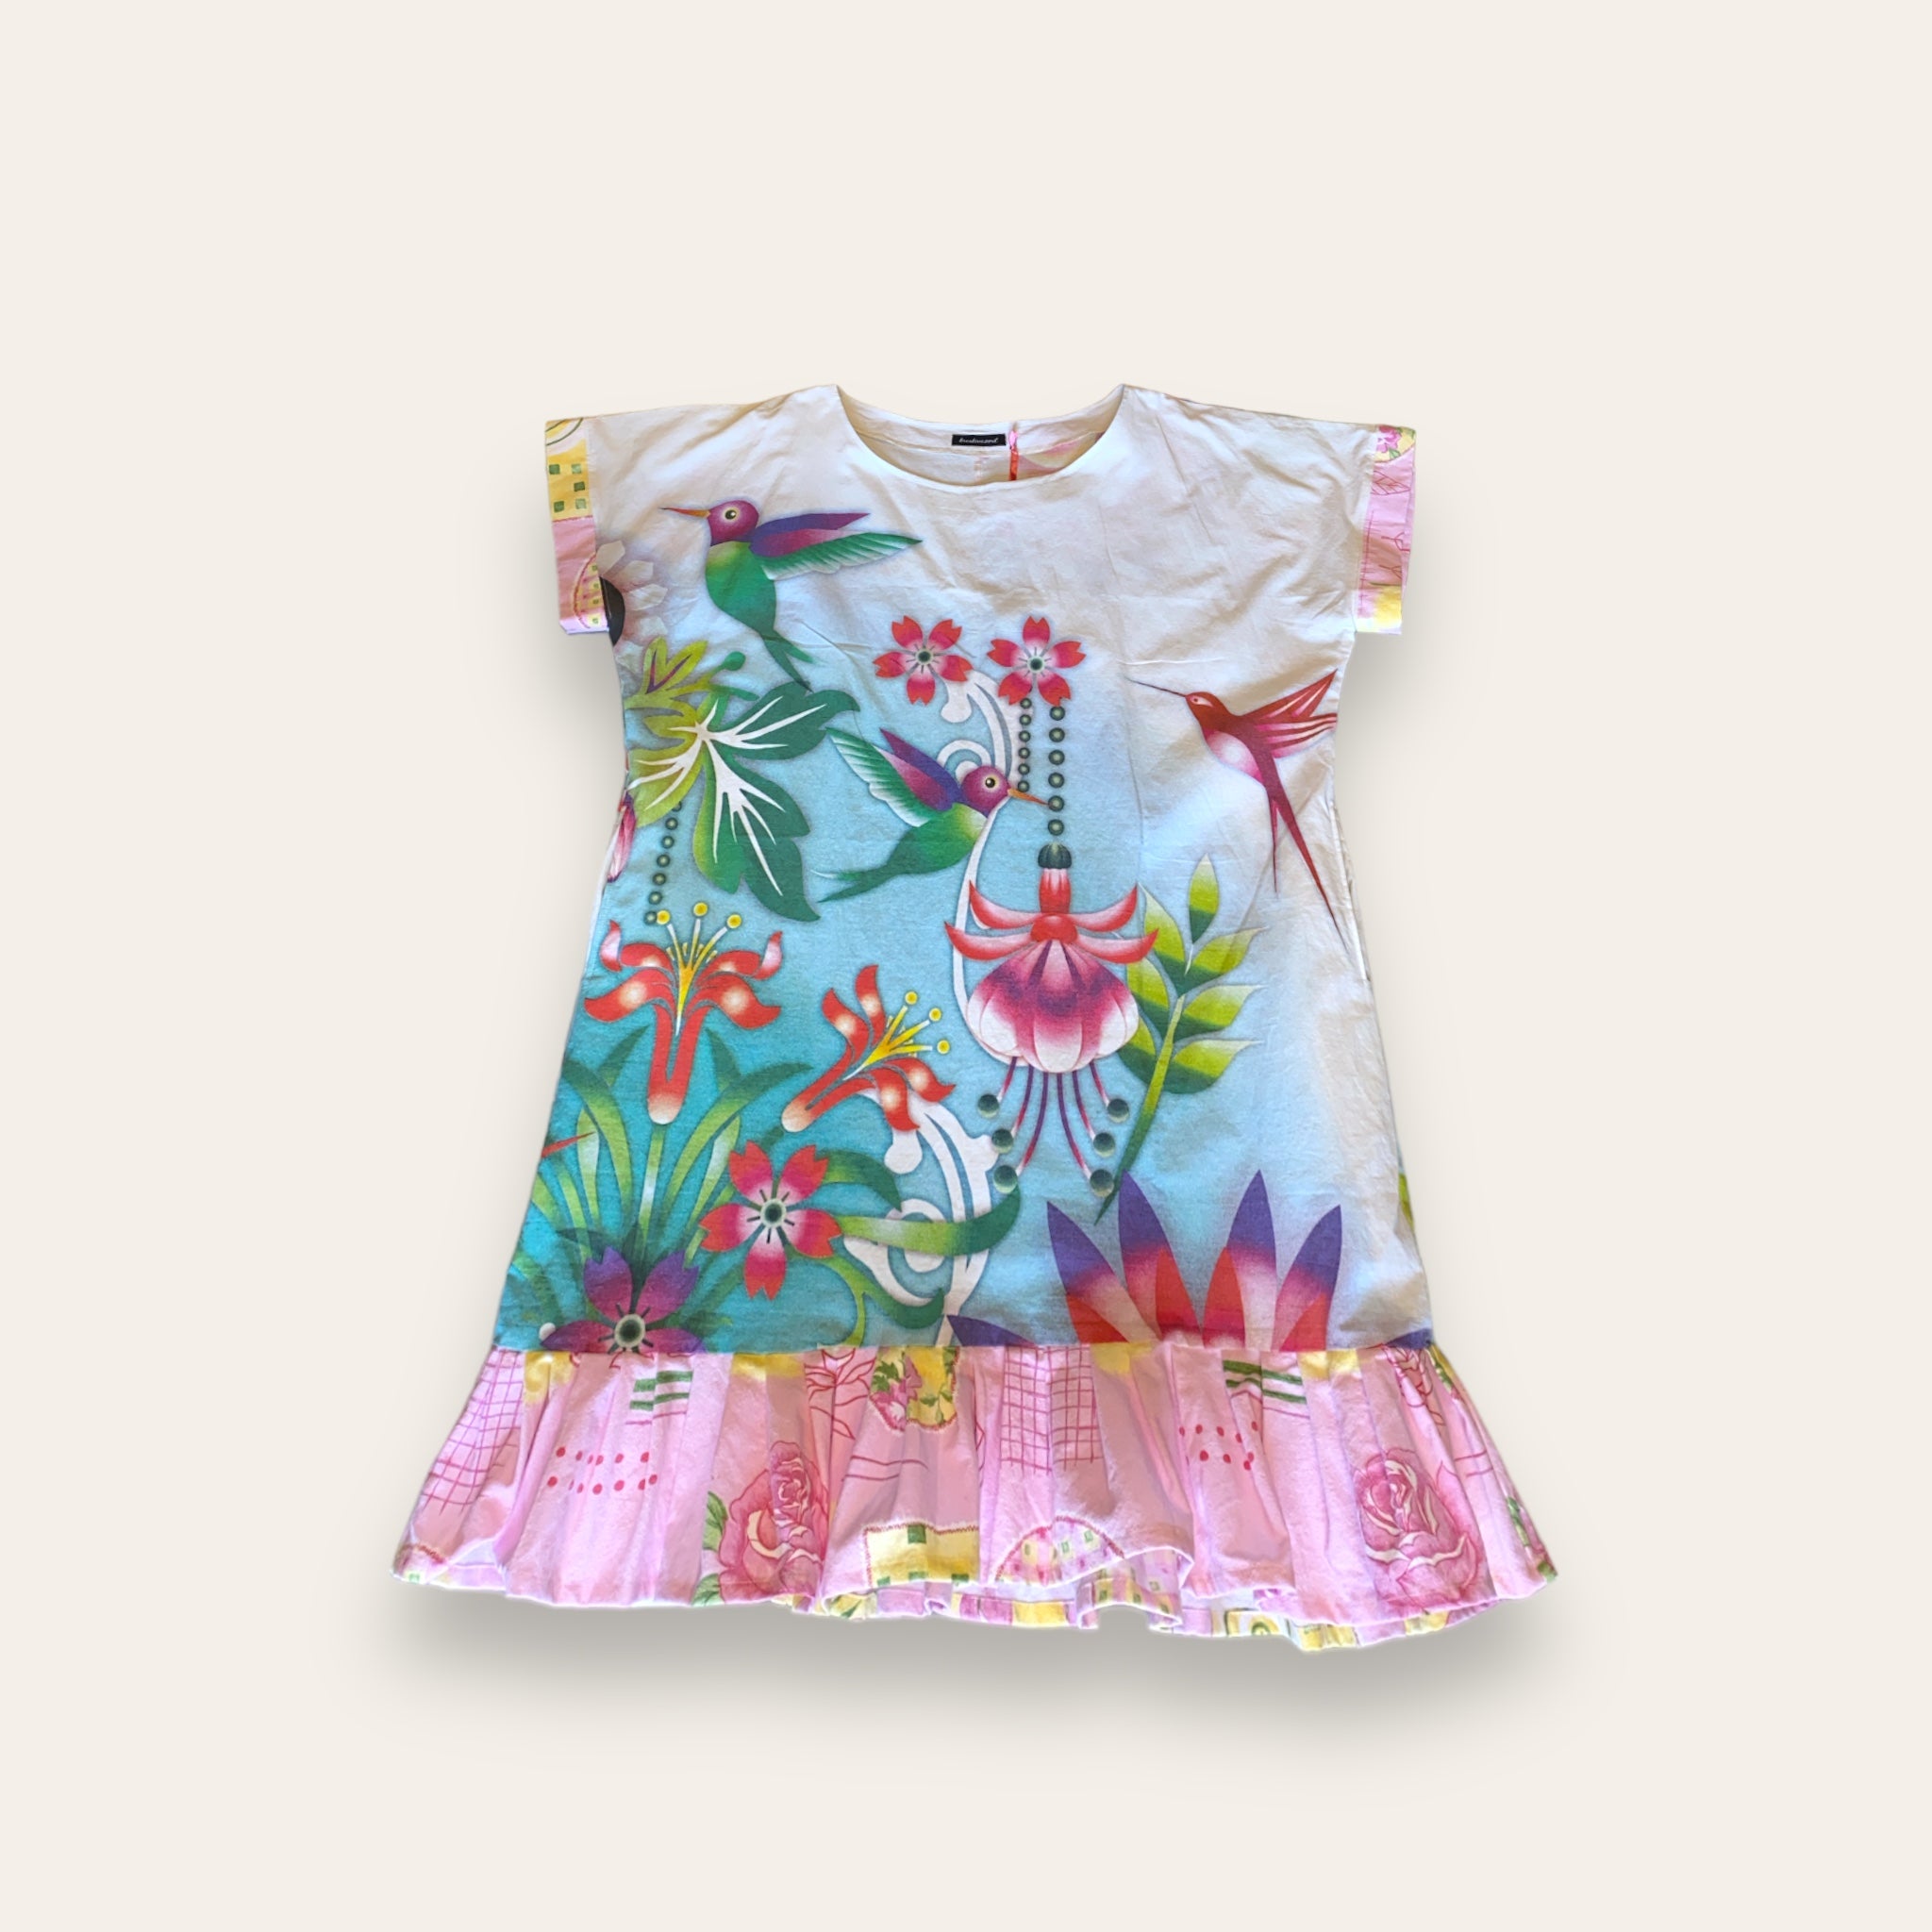 Kjole str S - L - sengetøjs kjole med fugle og blomster